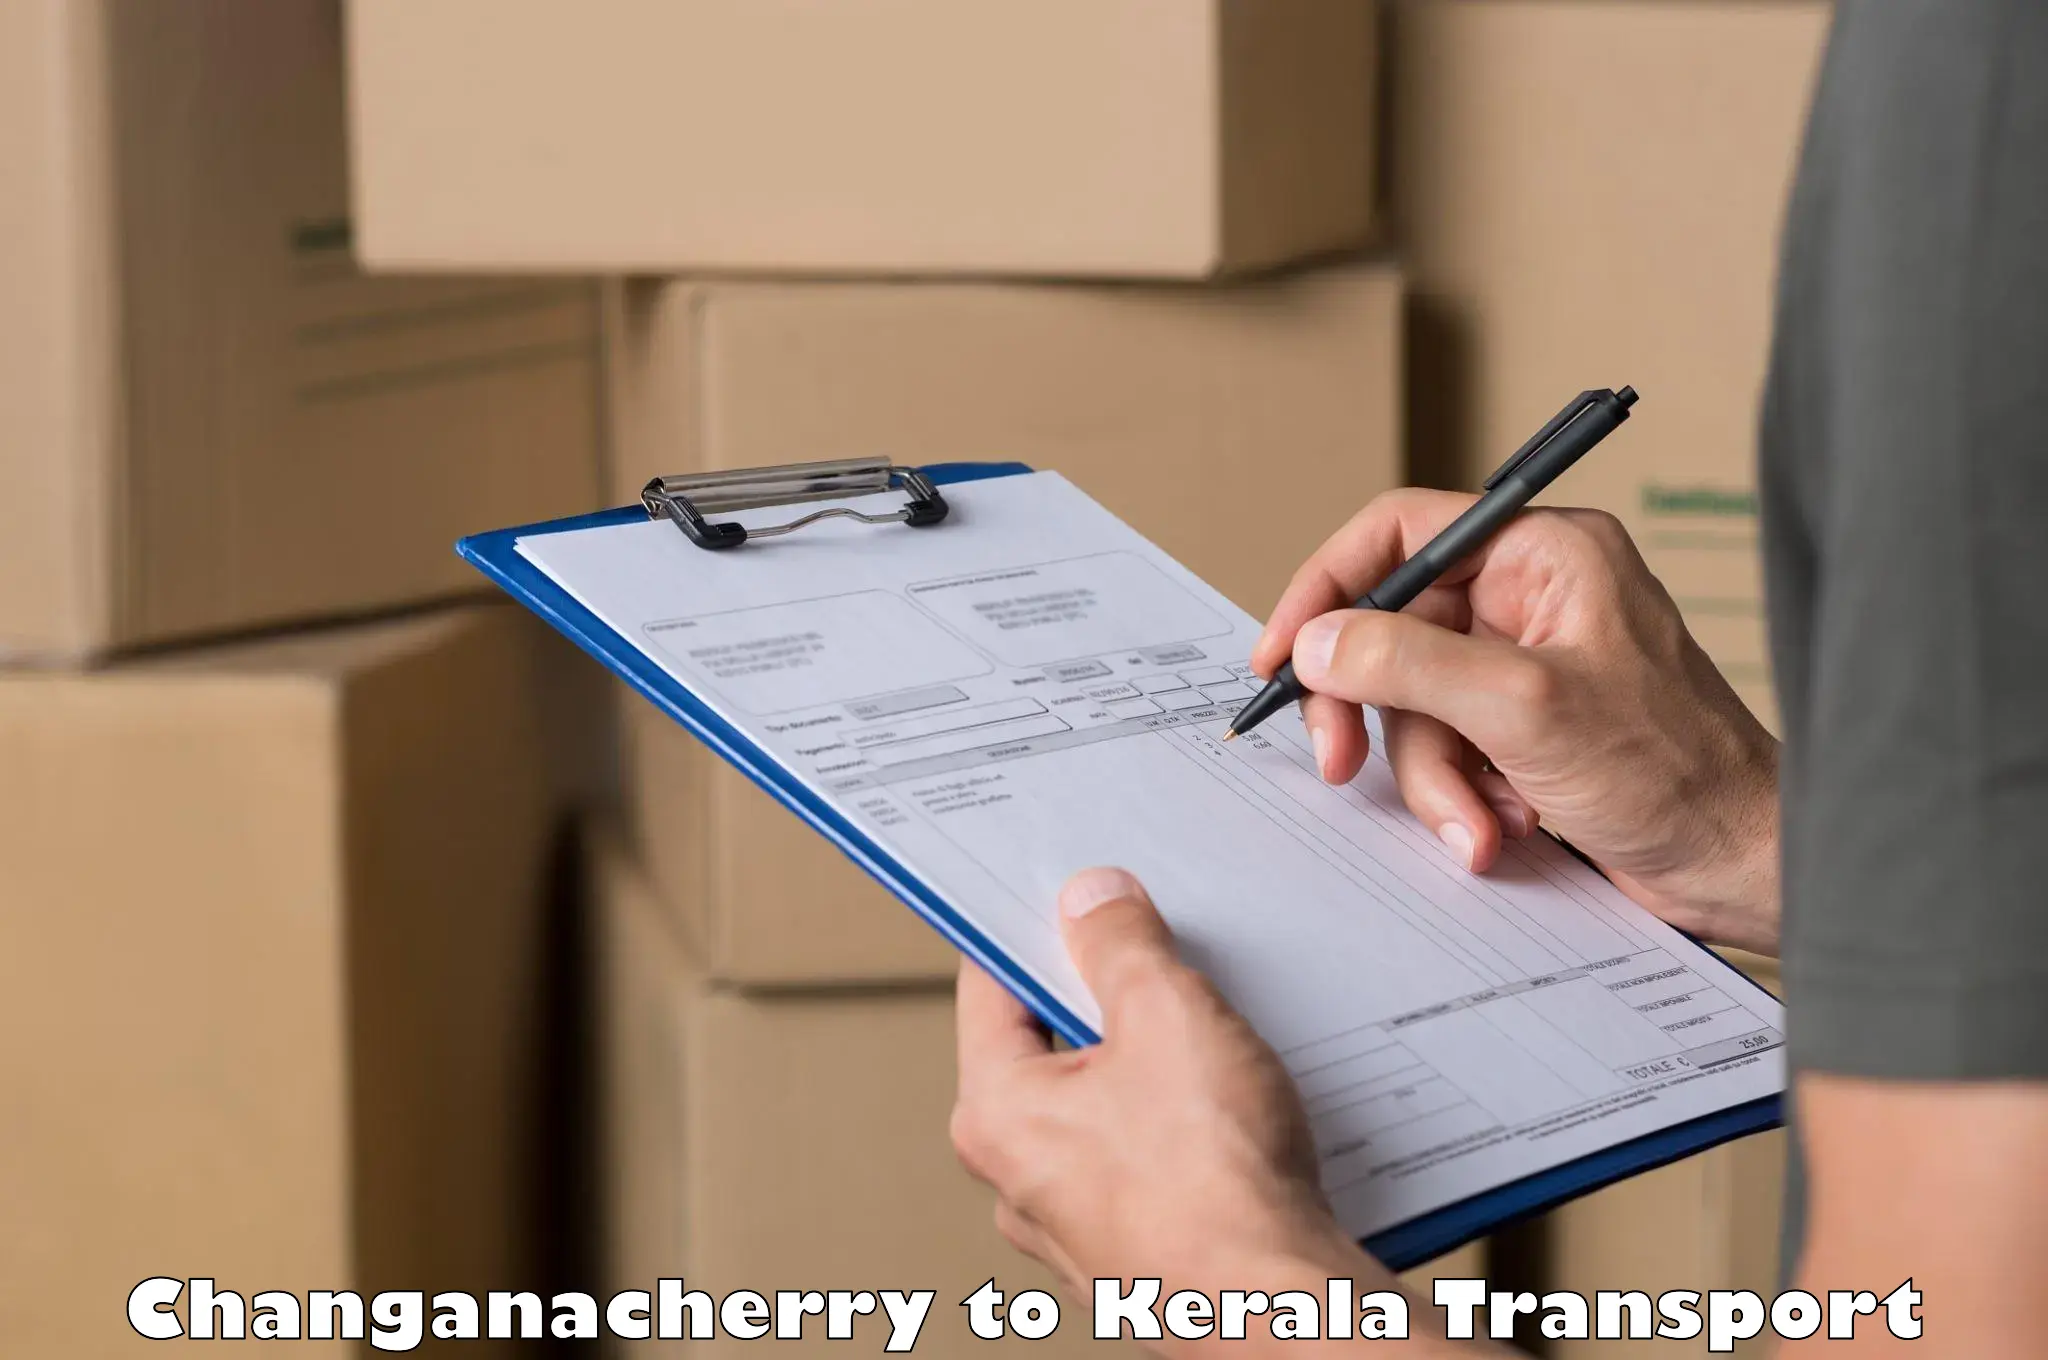 Delivery service Changanacherry to Perumbavoor